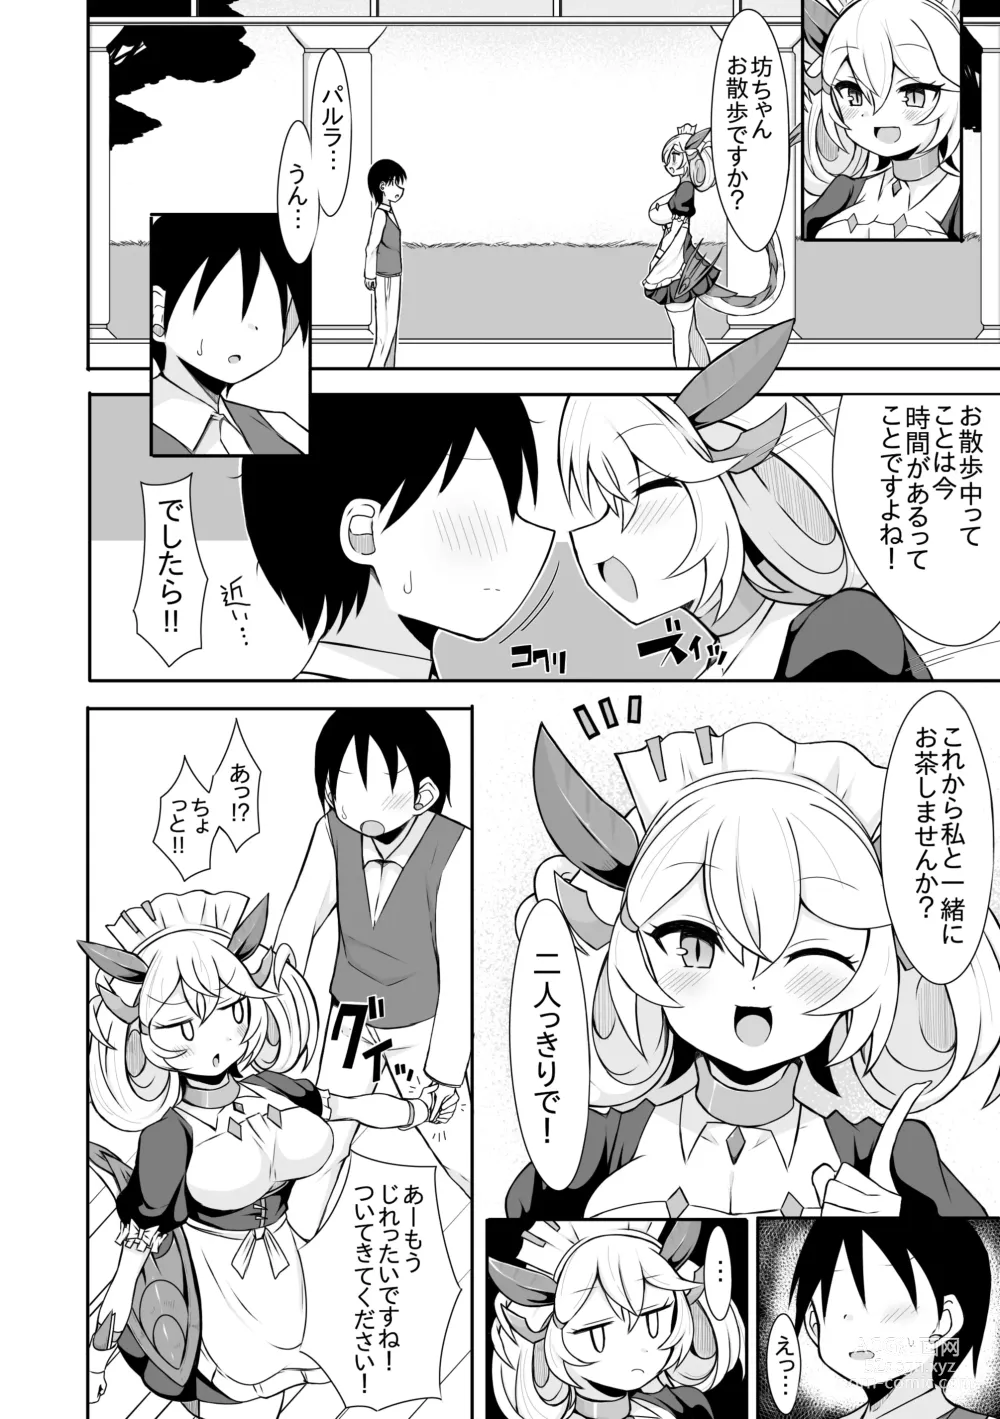 Page 3 of doujinshi Parlor no Manga